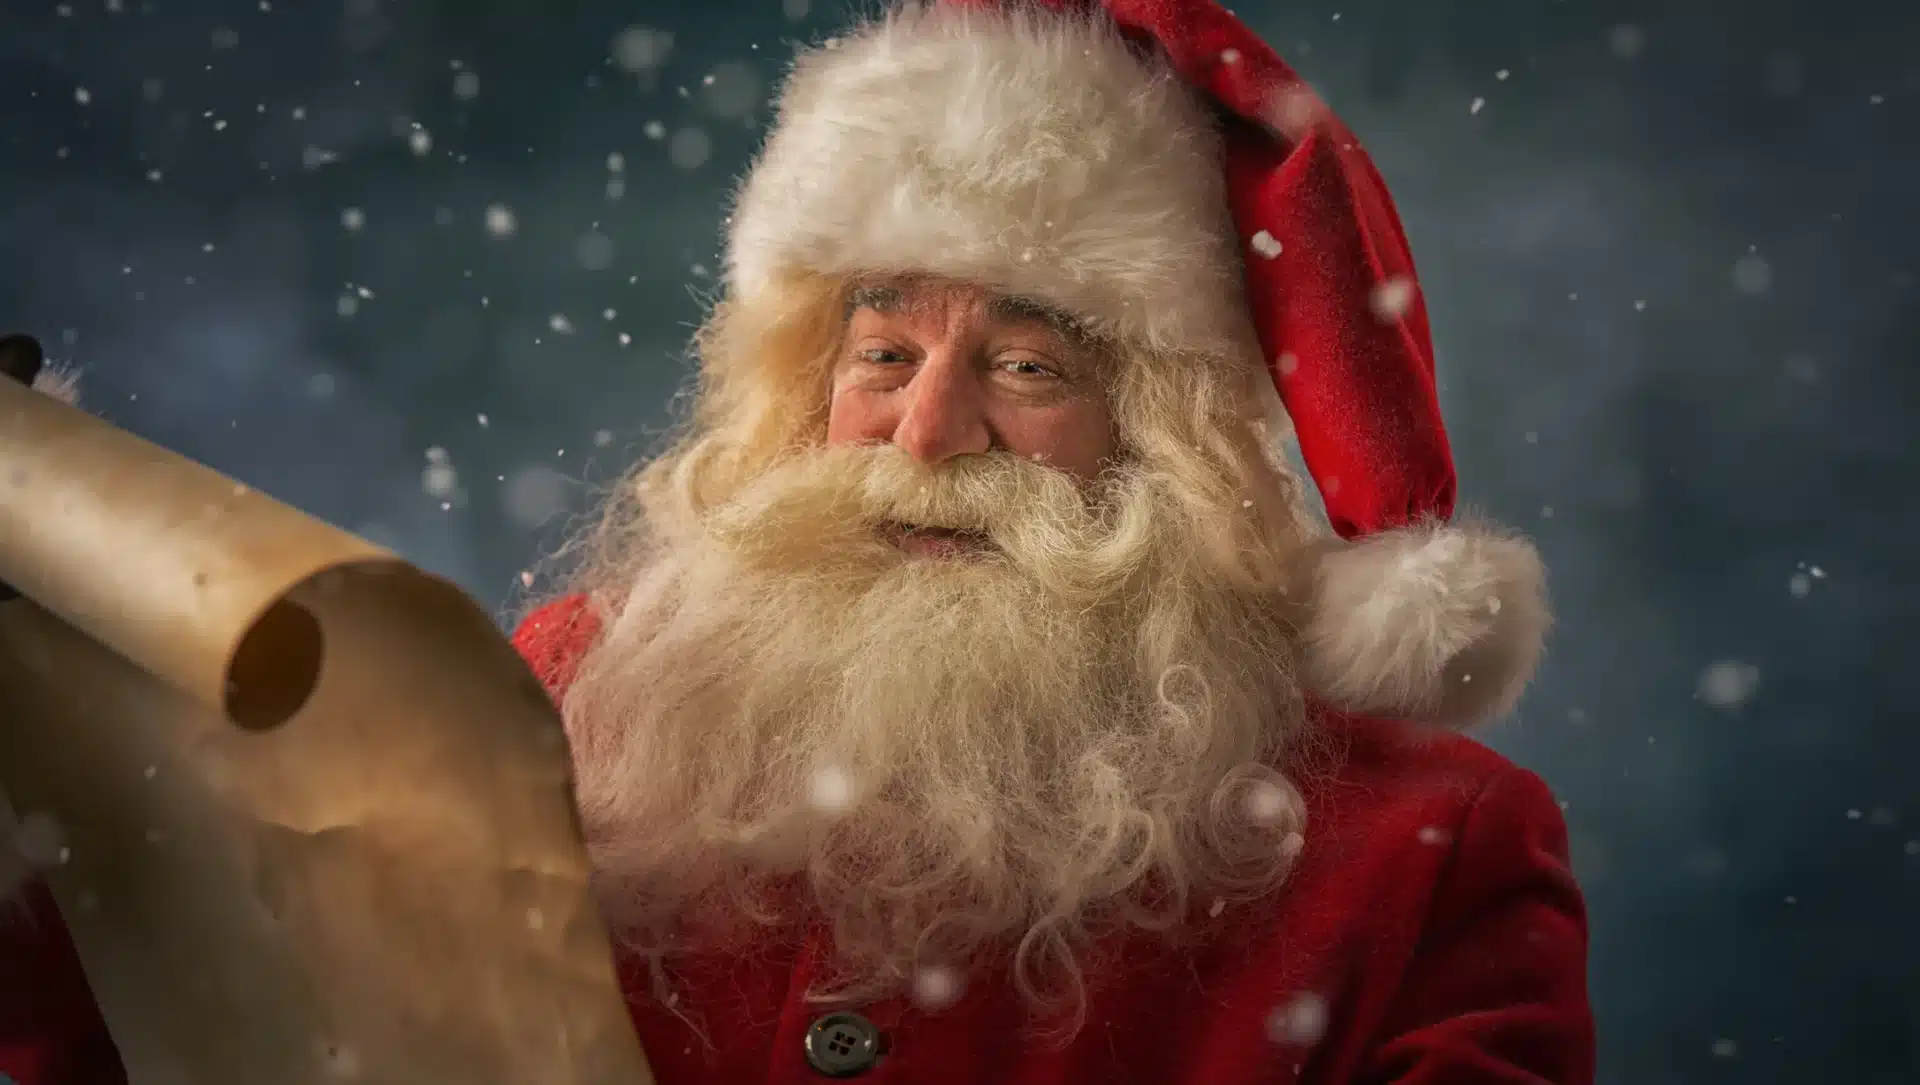 Real Santa Claus in Ireland